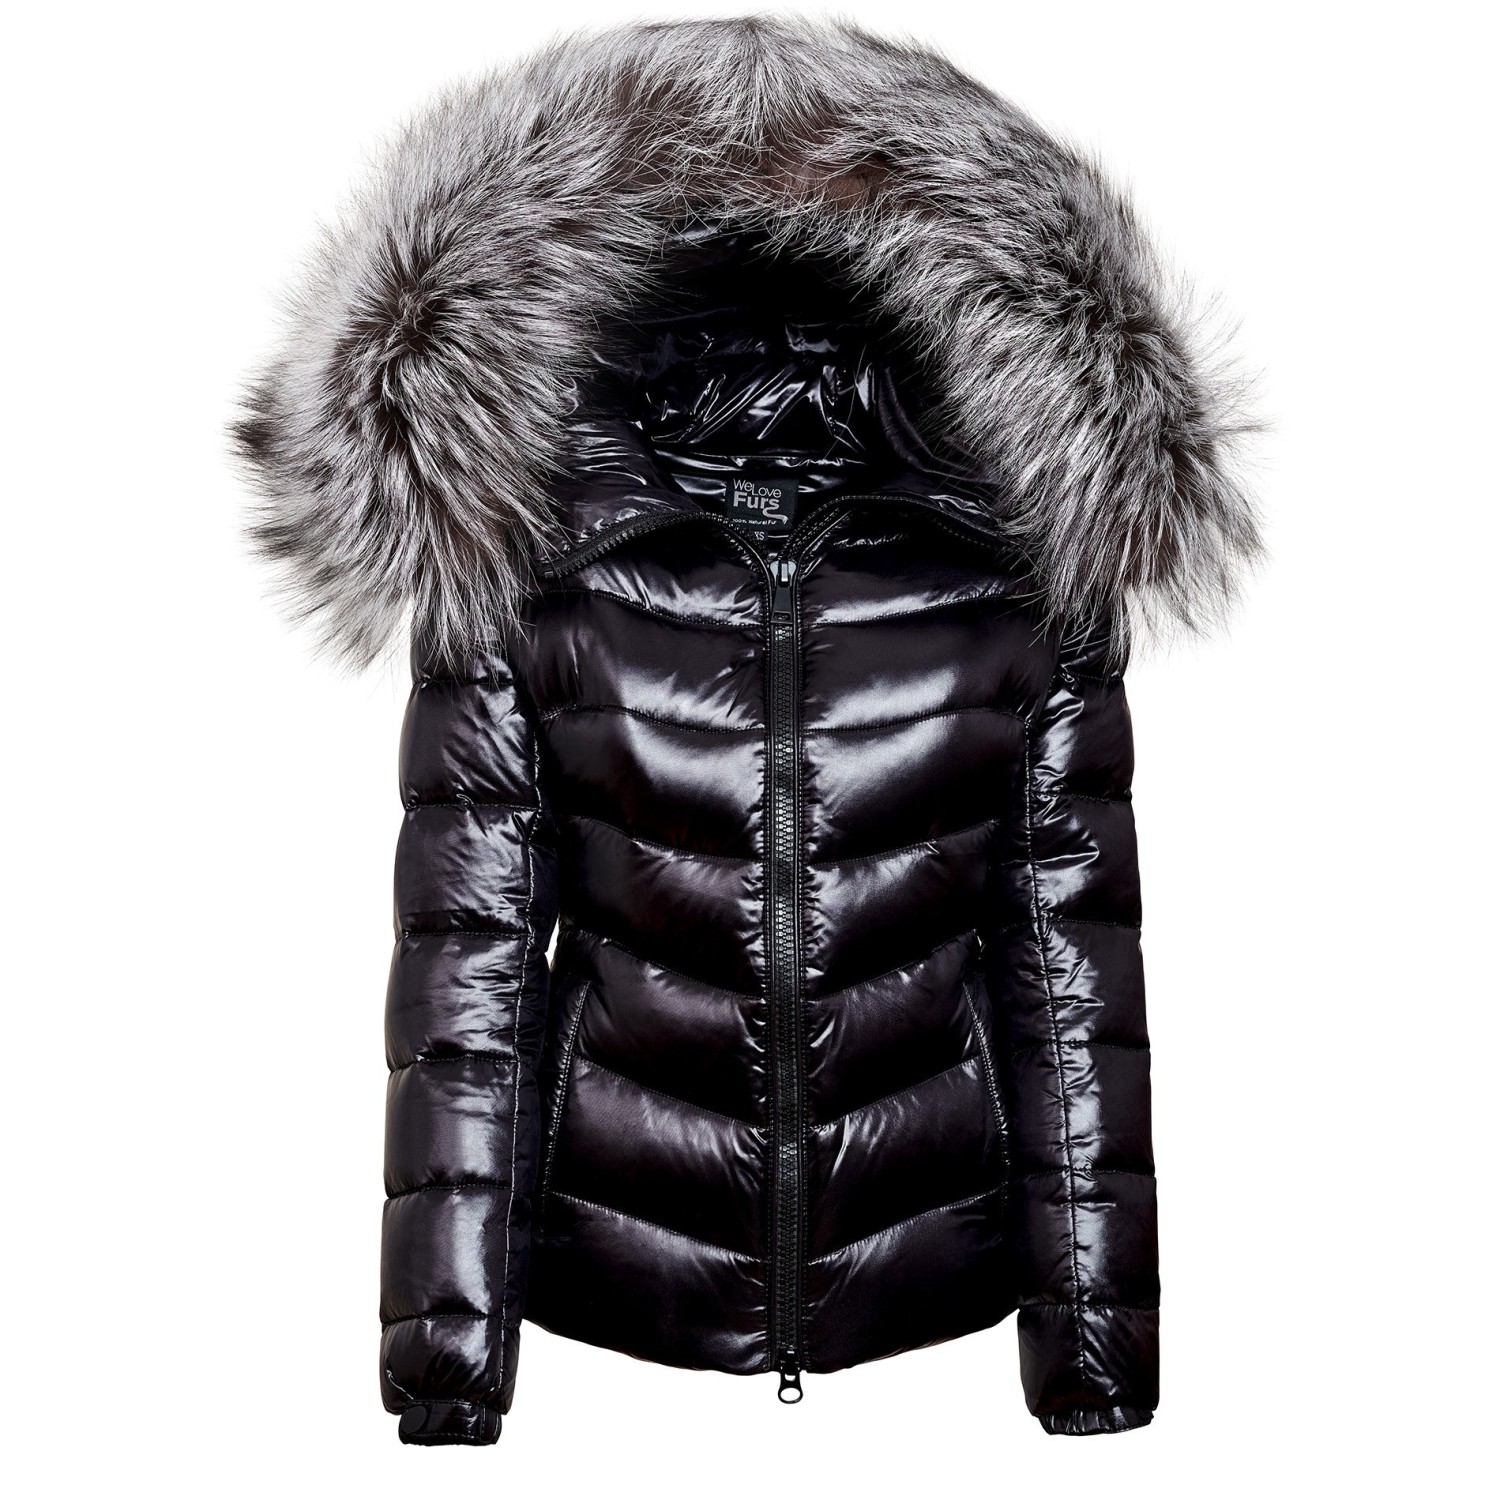 Puffer Jacket With Fur Hood Iceblack, Black Ladies Coat Fur Hood